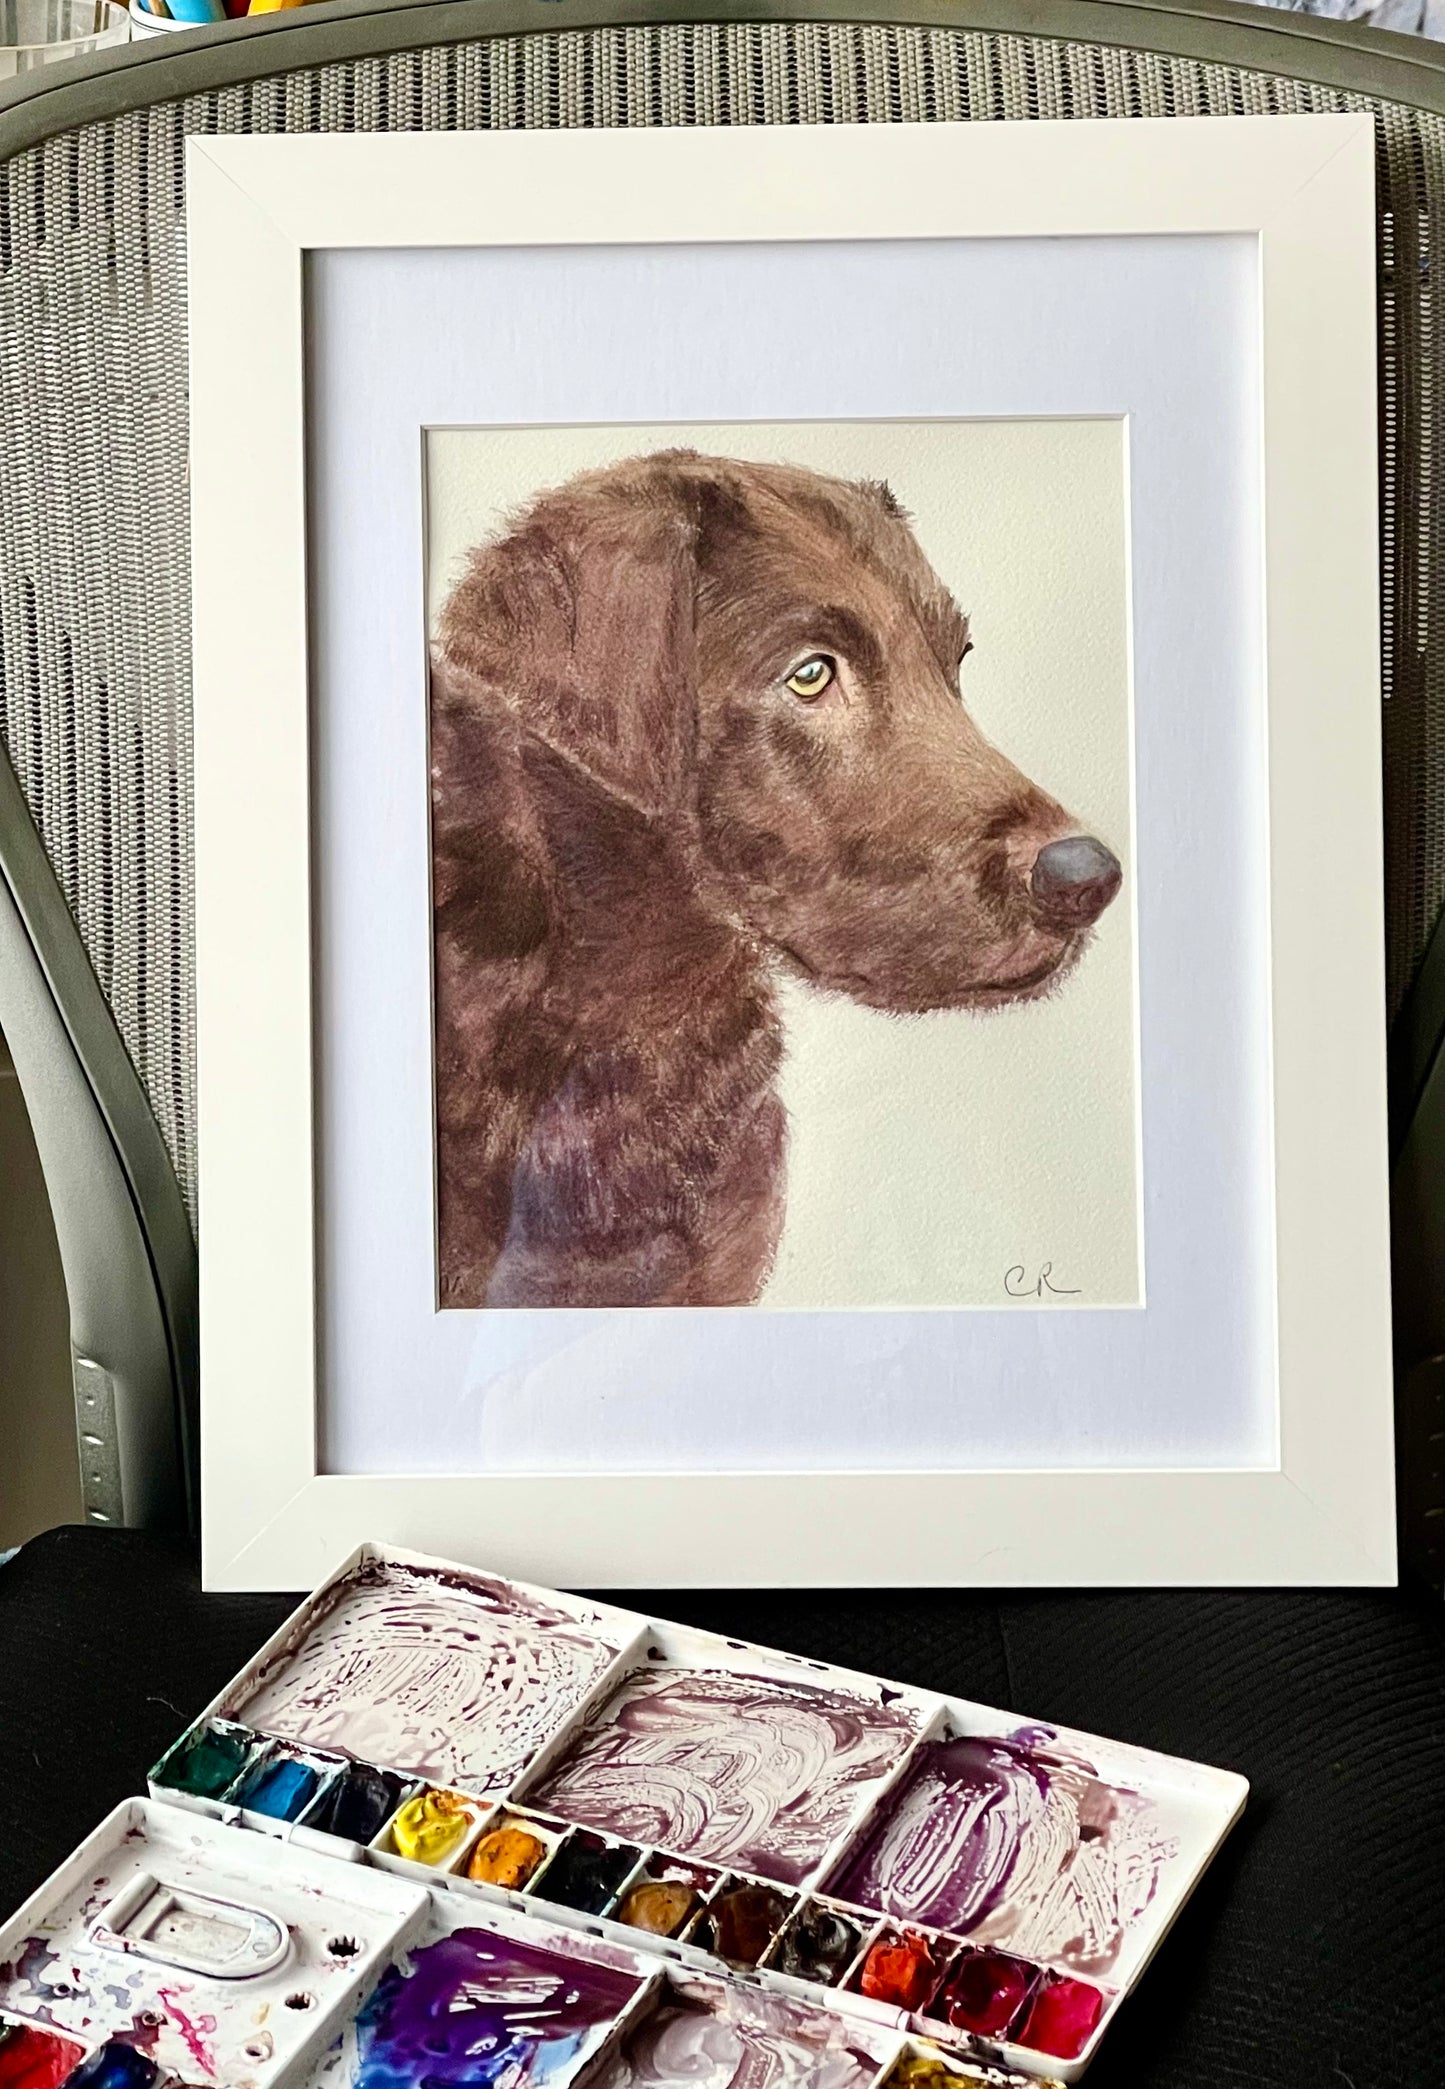 Classic Dog Portrait